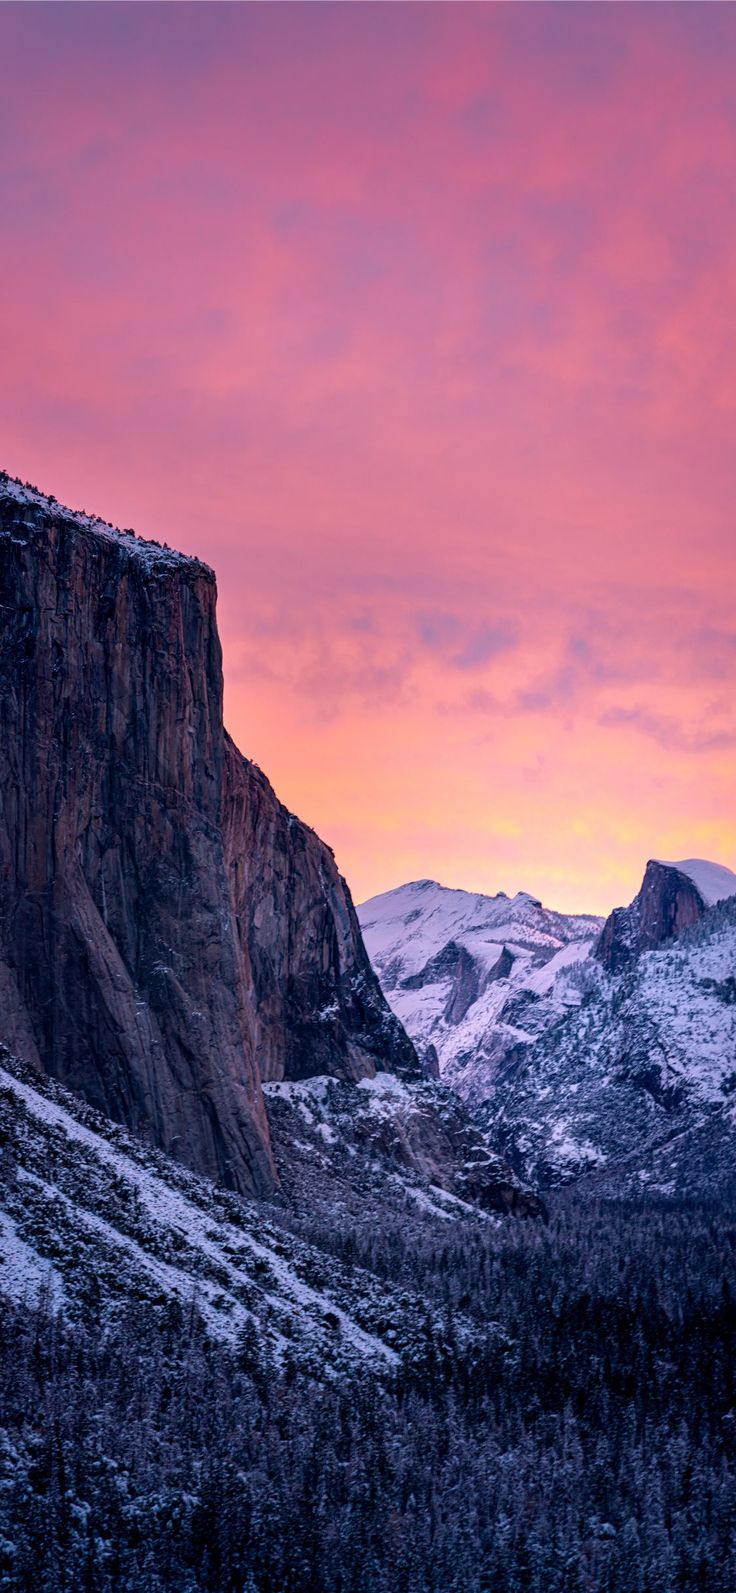 Winter Sunrise in Yosemite iPhone X Wallpaper. Yosemite wallpaper, iPhone wallpaper winter, Nature wallpaper